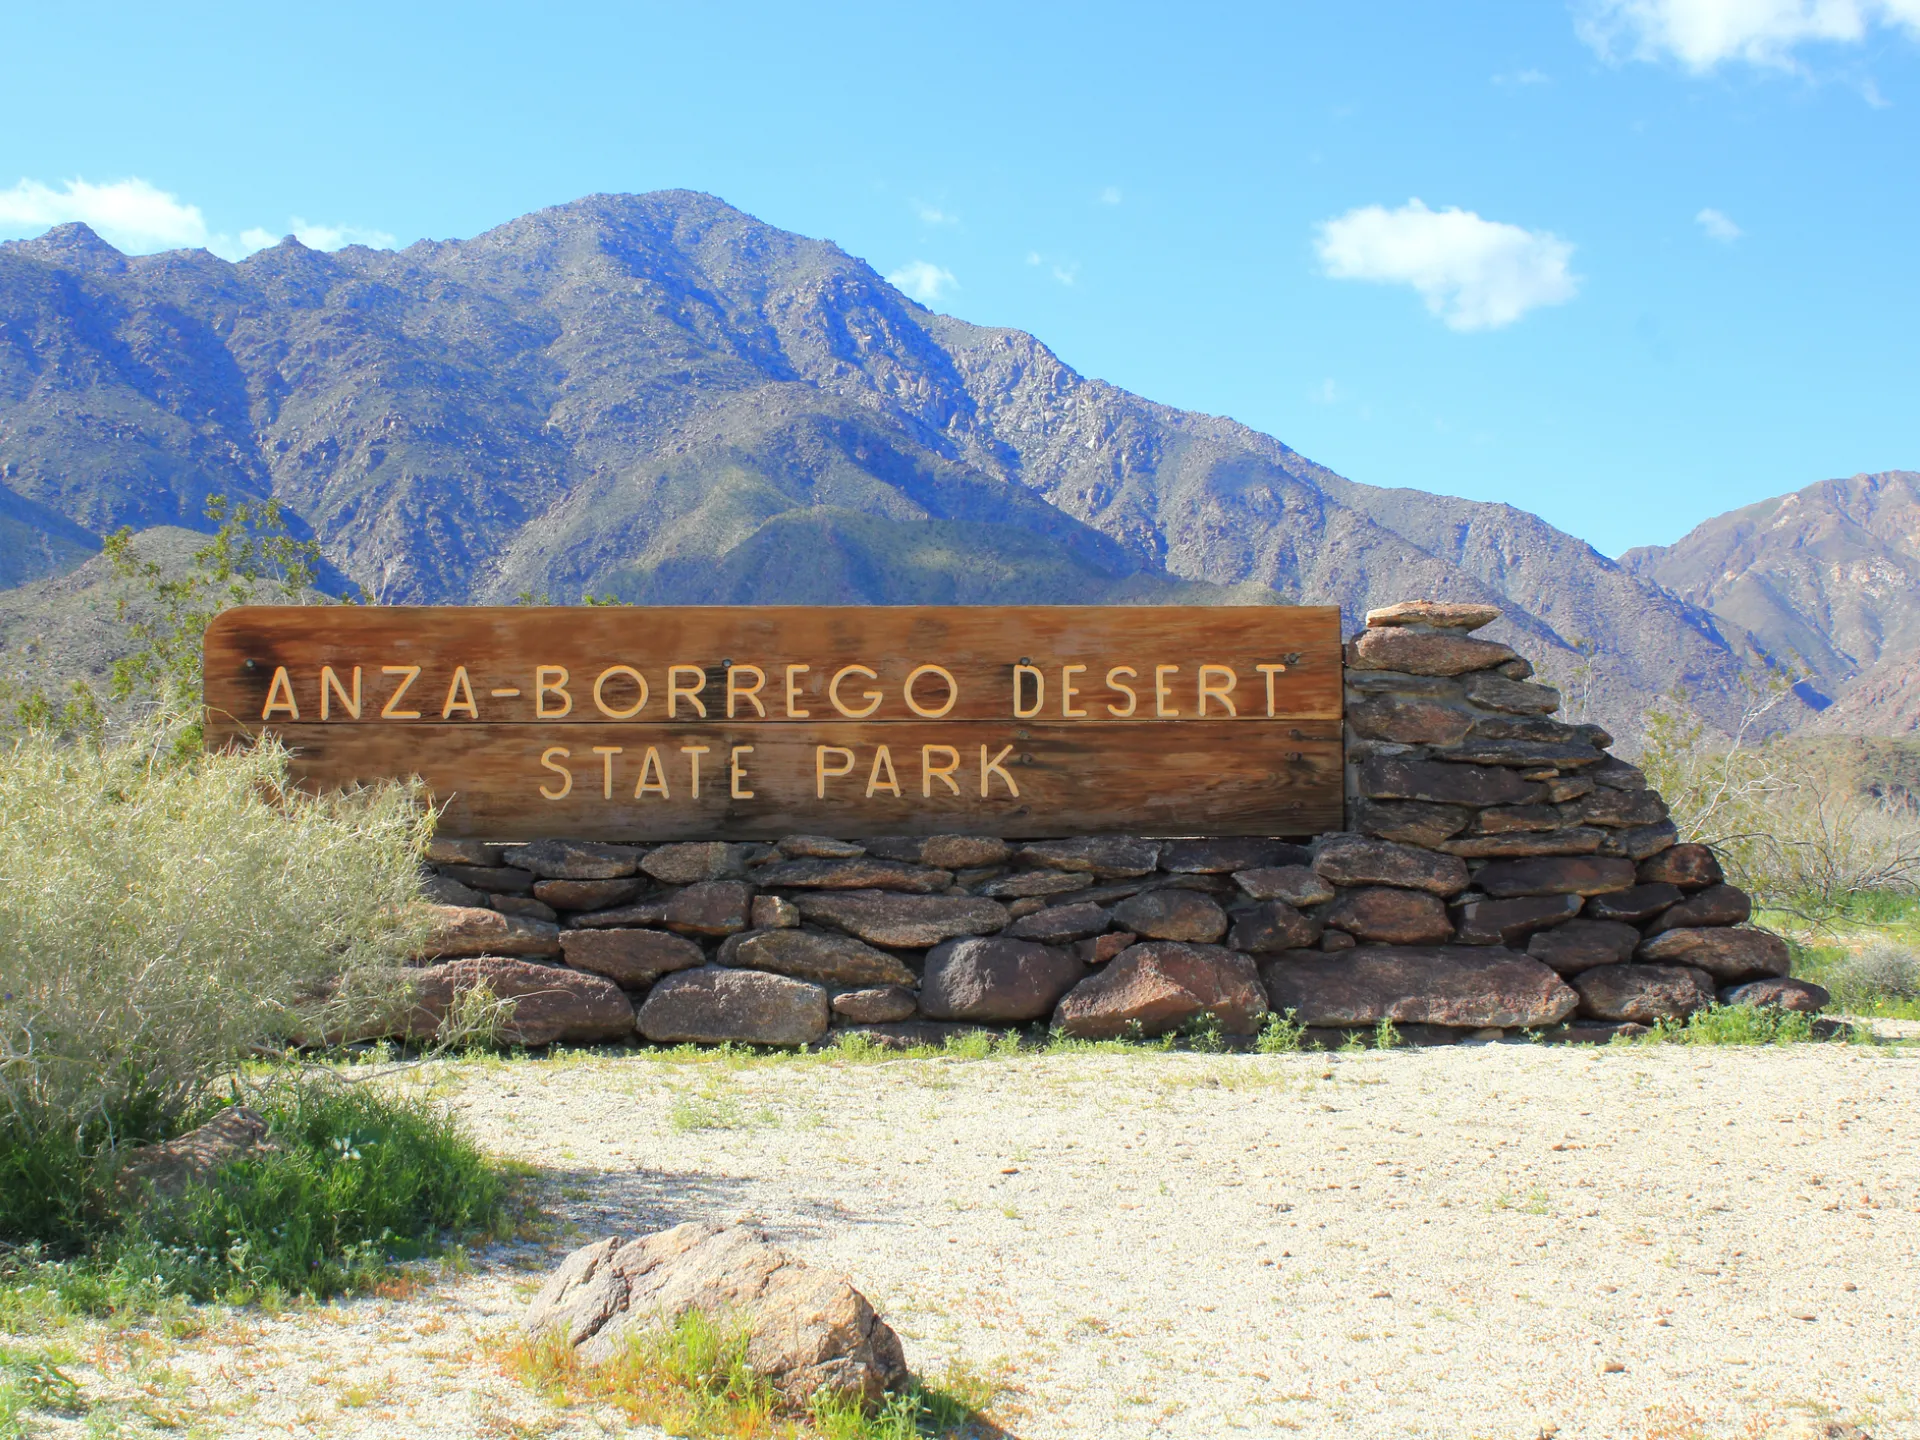 Entrance sign to Anza-Borrego Desert State Park.